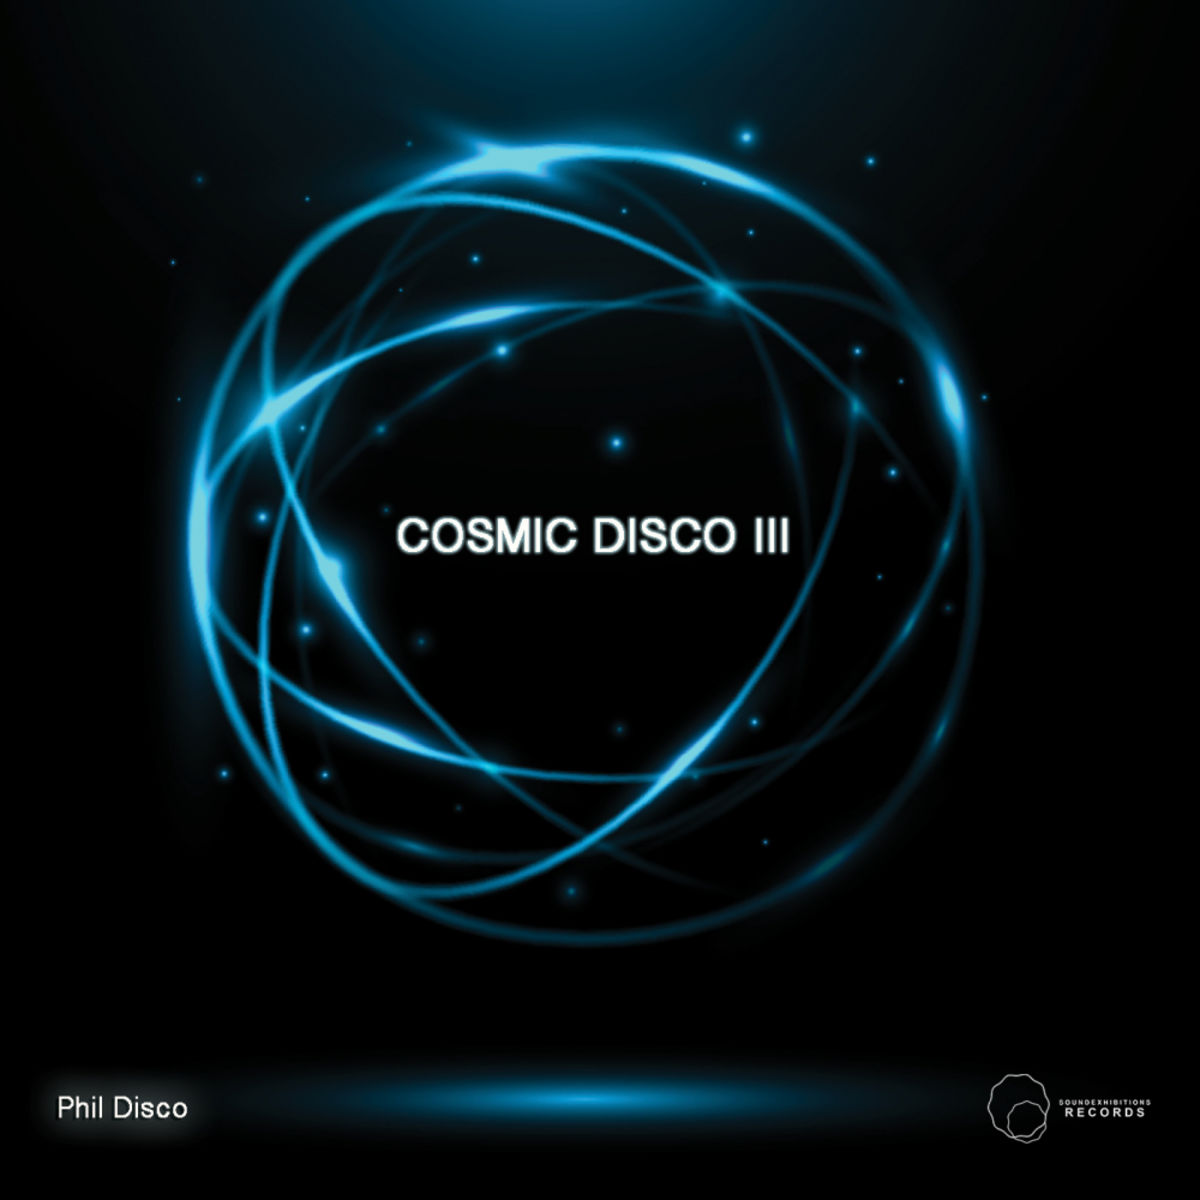 Phil Disco - Cosmic Disco, Pt. 3 / Sound Exhibitions Records